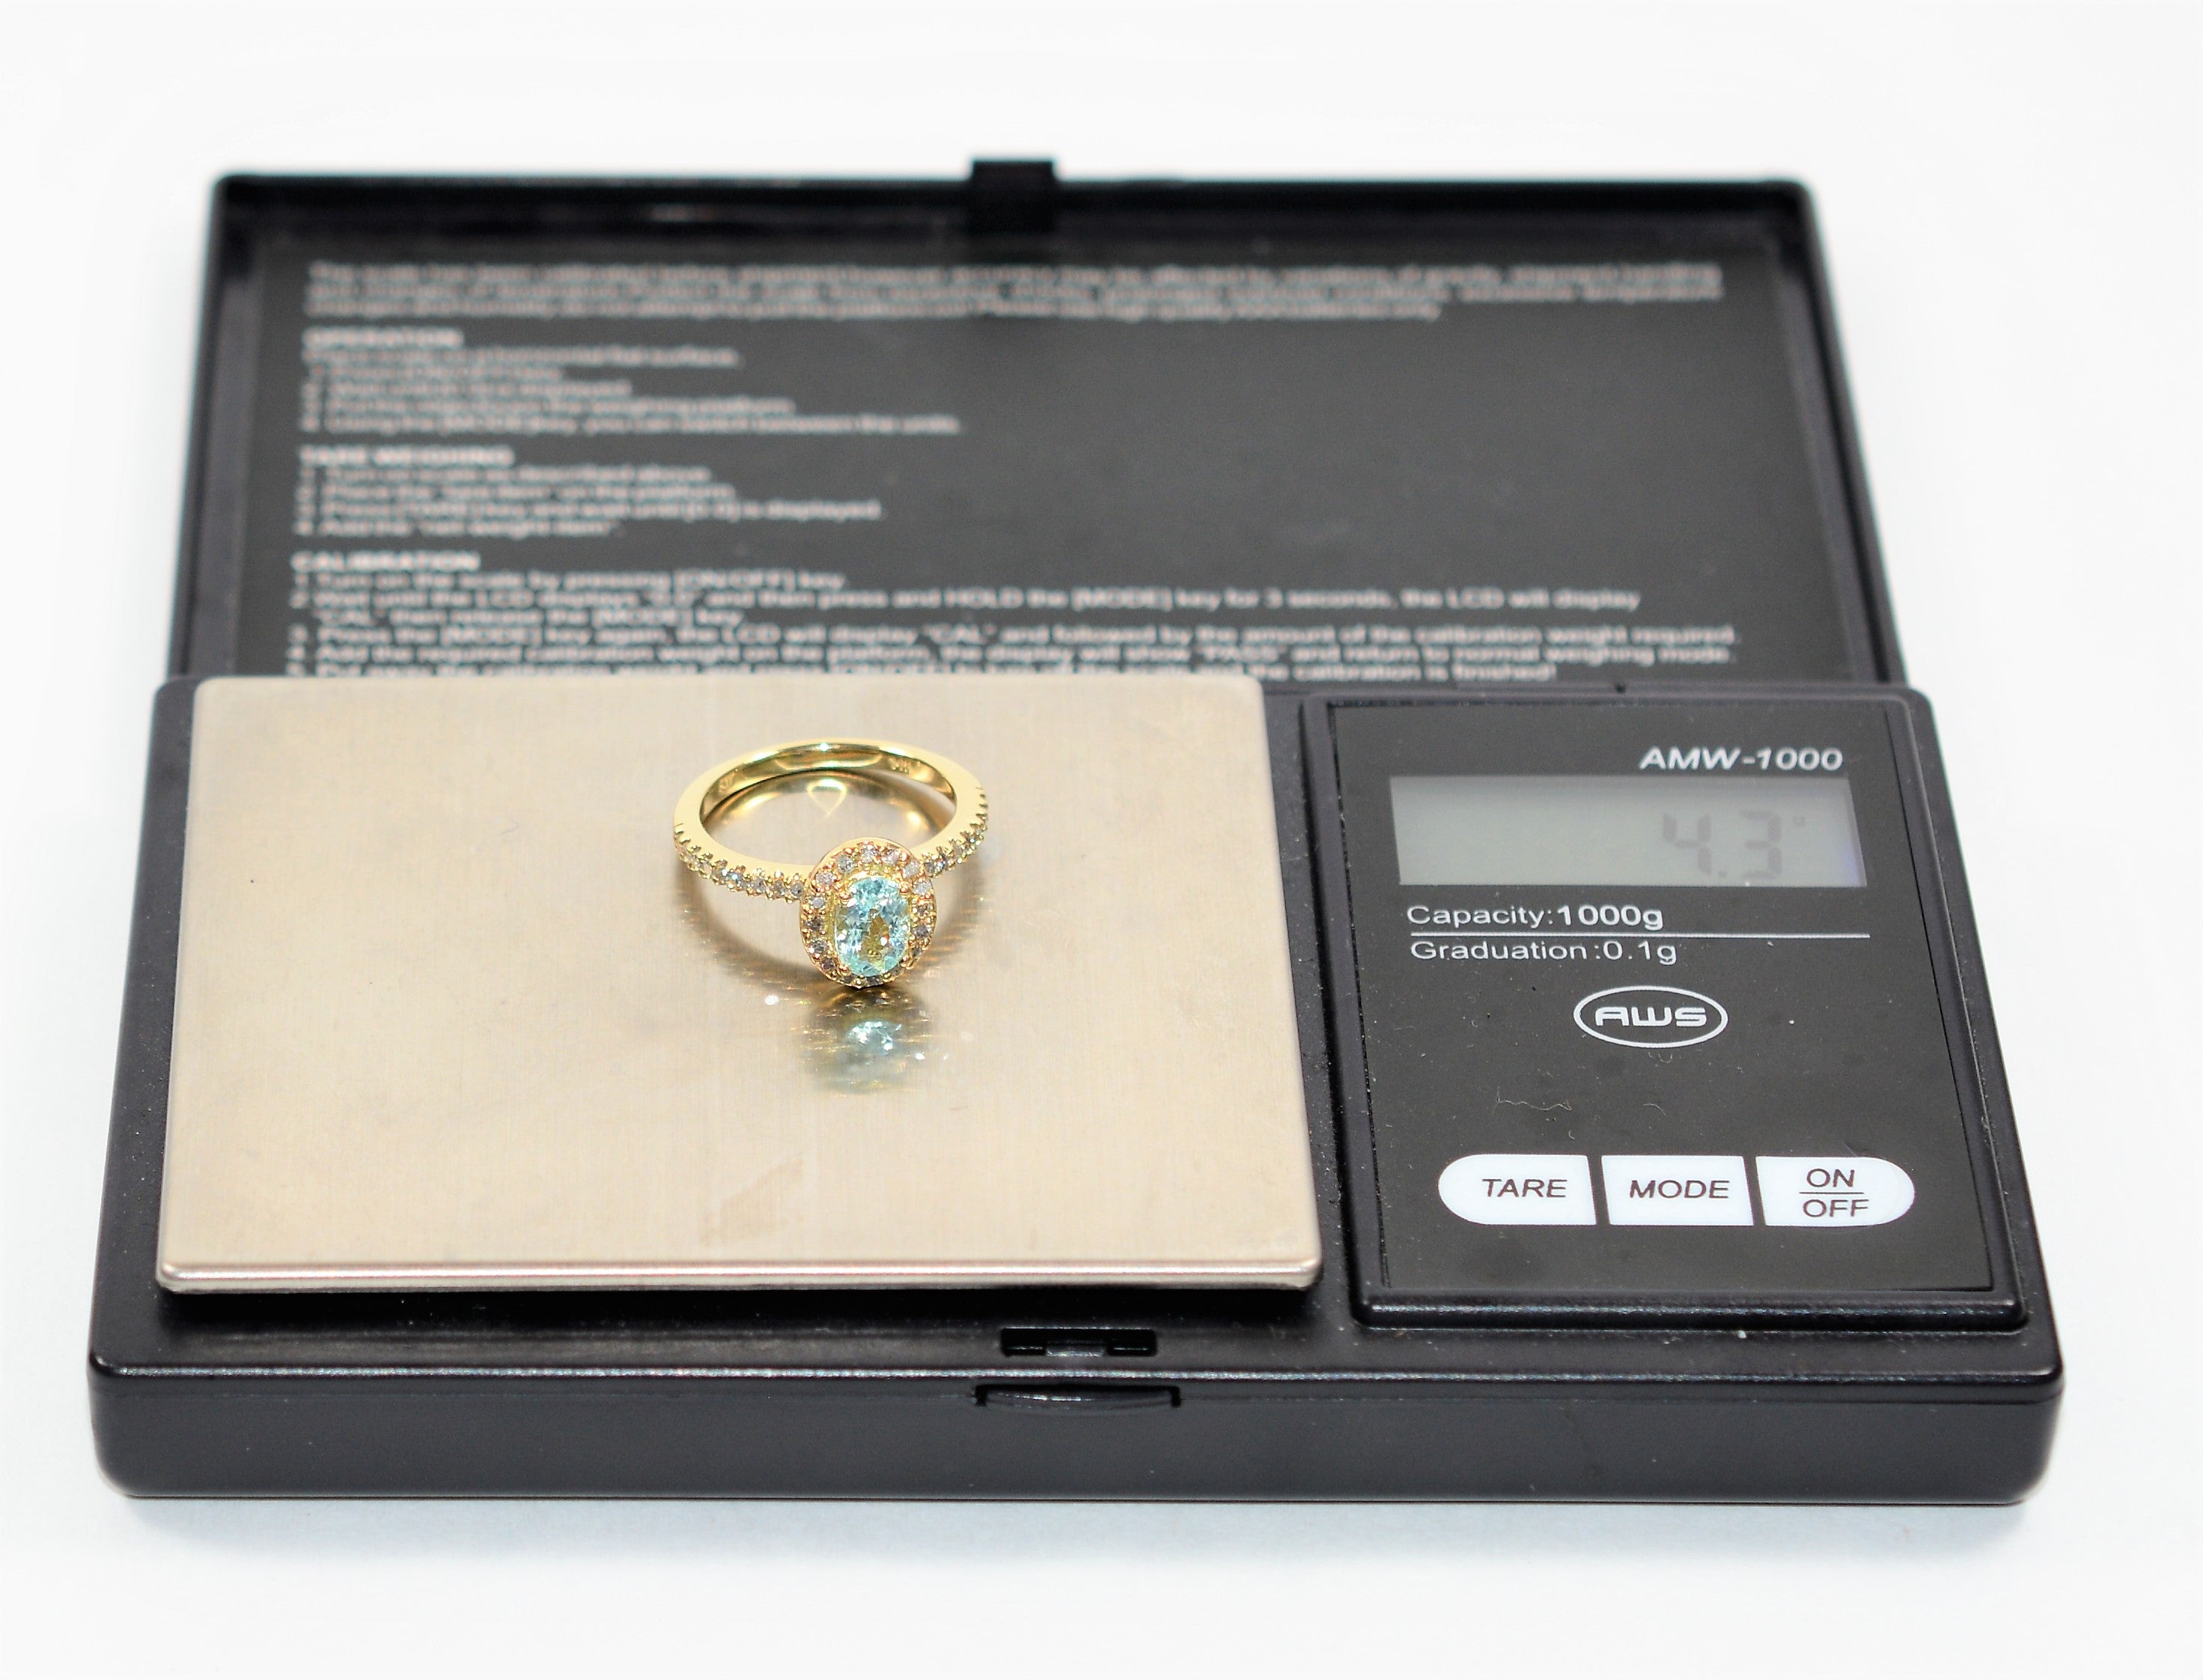 Natural Paraiba Tourmaline & Diamond Ring 14K Solid Gold 1.40tcw Engagement Ring Promise Ring Bridal Jewelry Gemstone Ring Fine Women's Ring